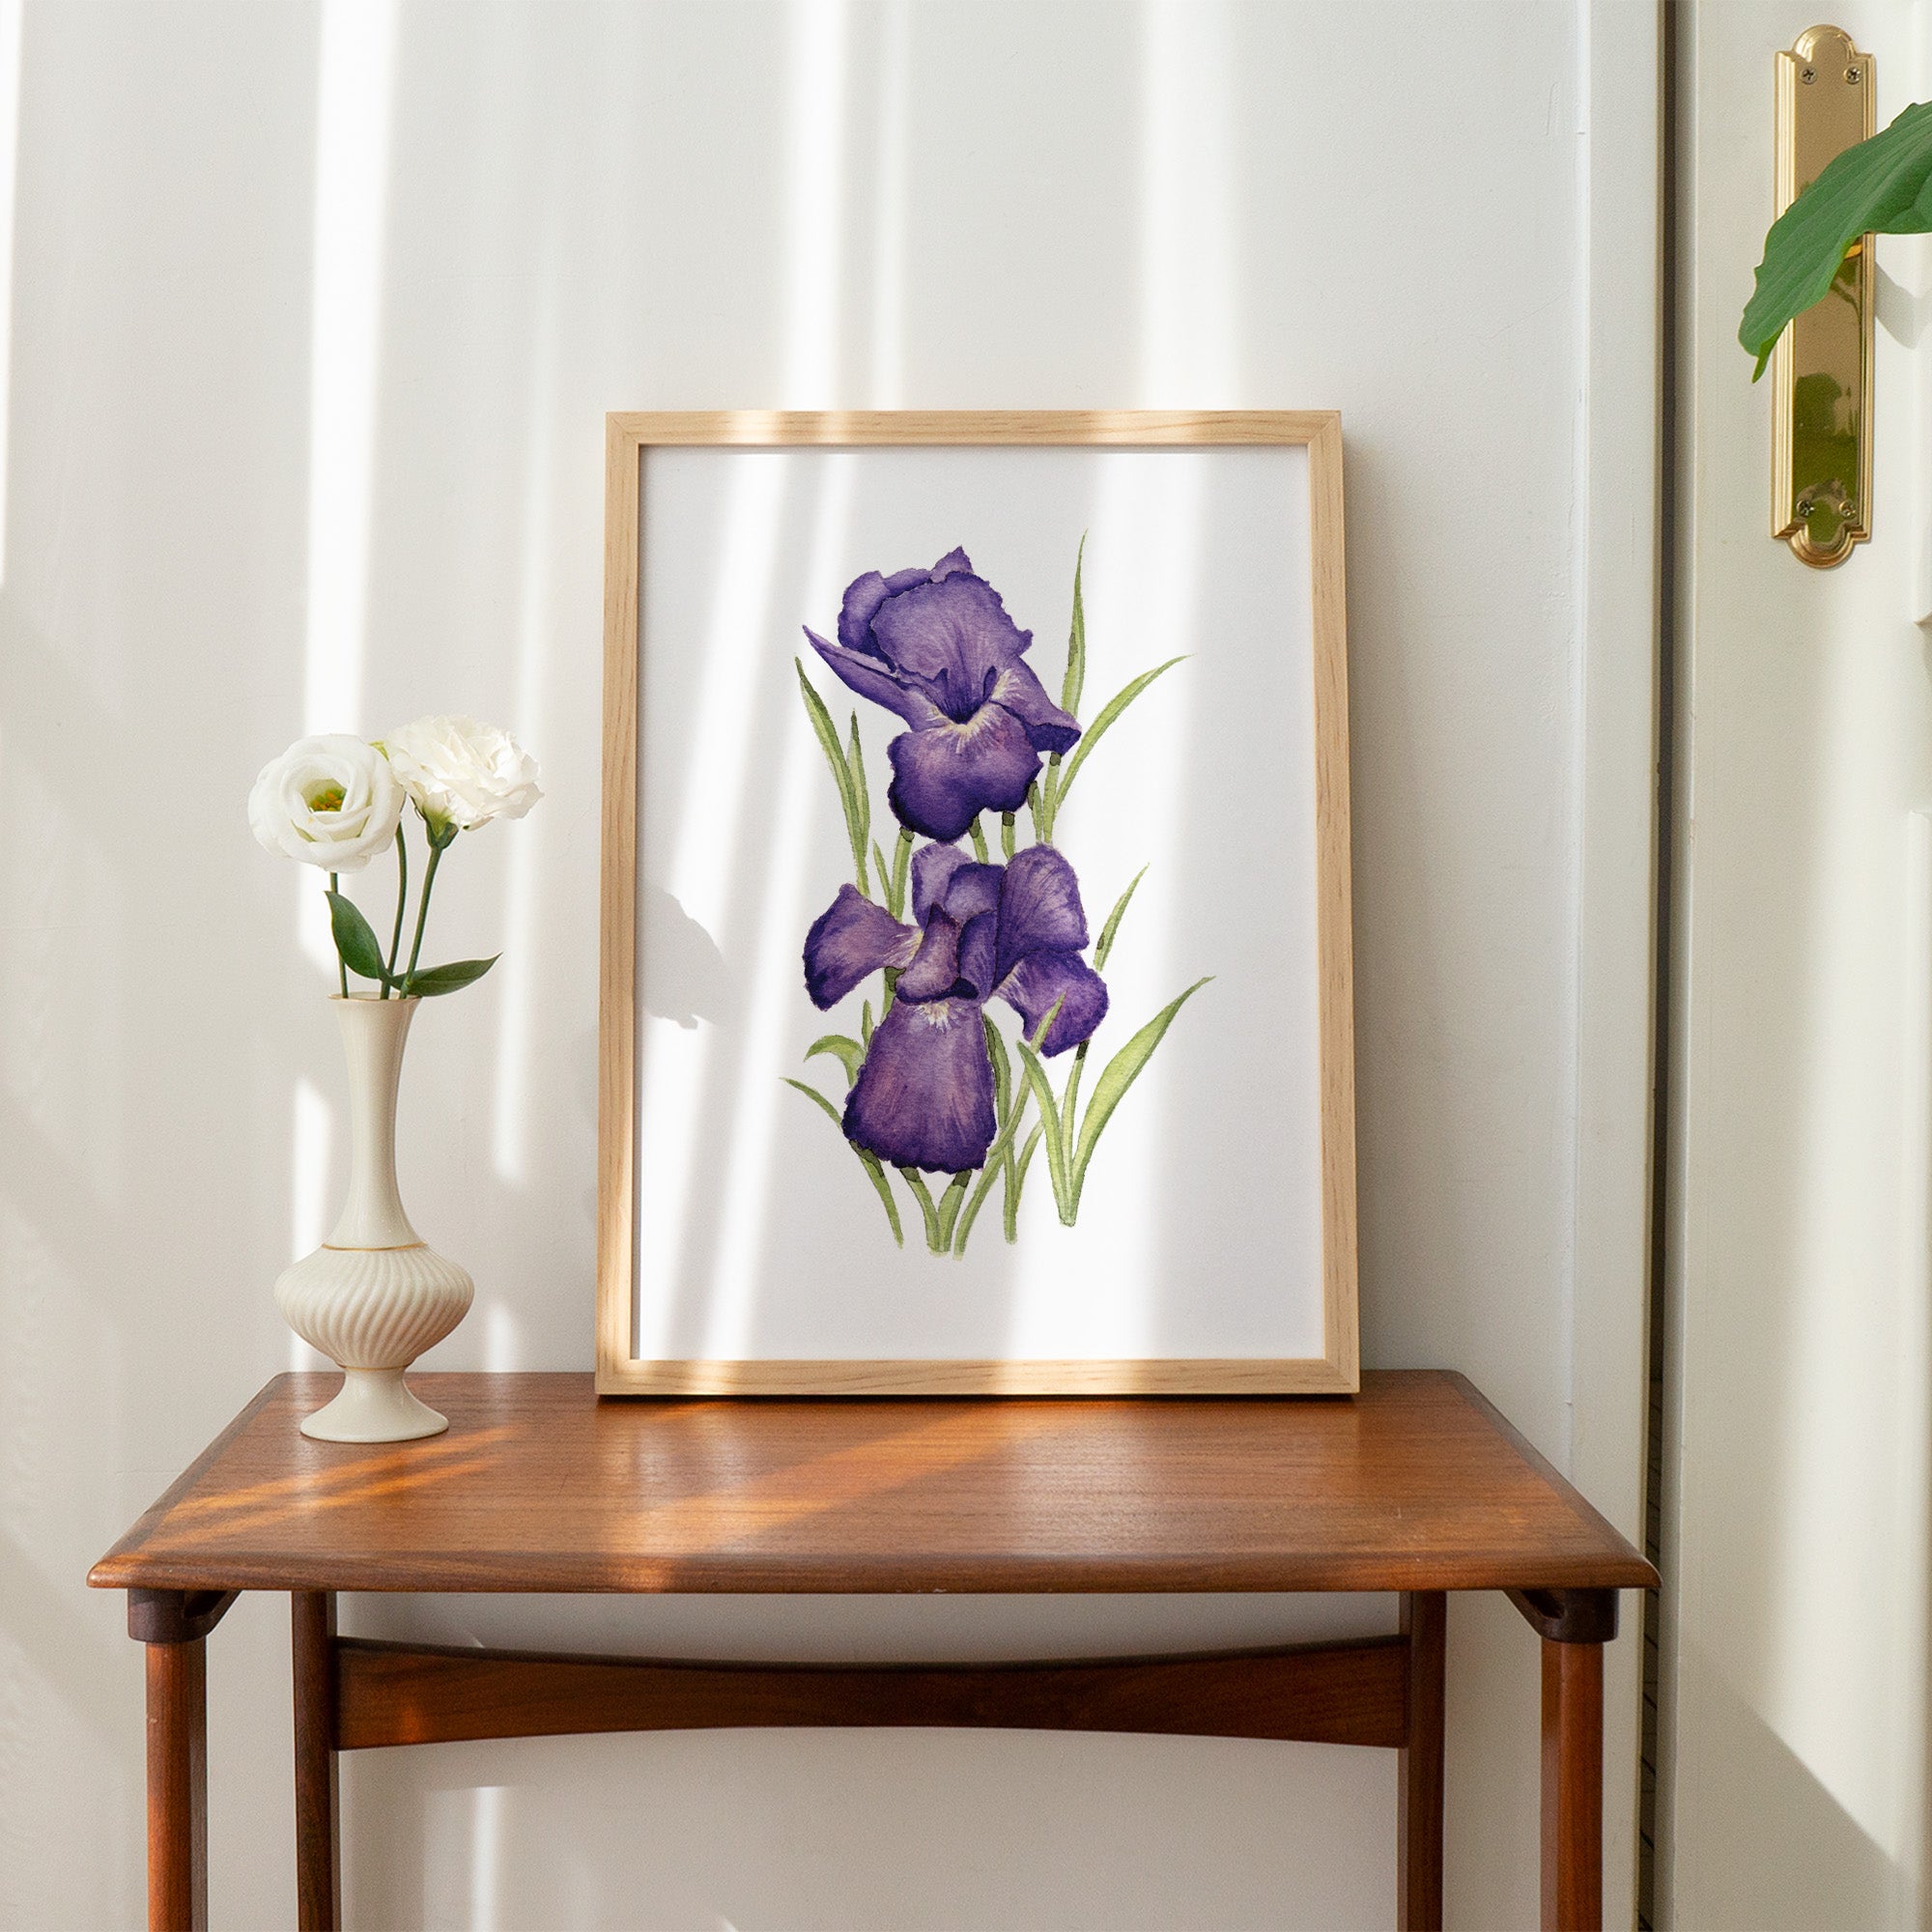 Watercolor print of an iris flower.